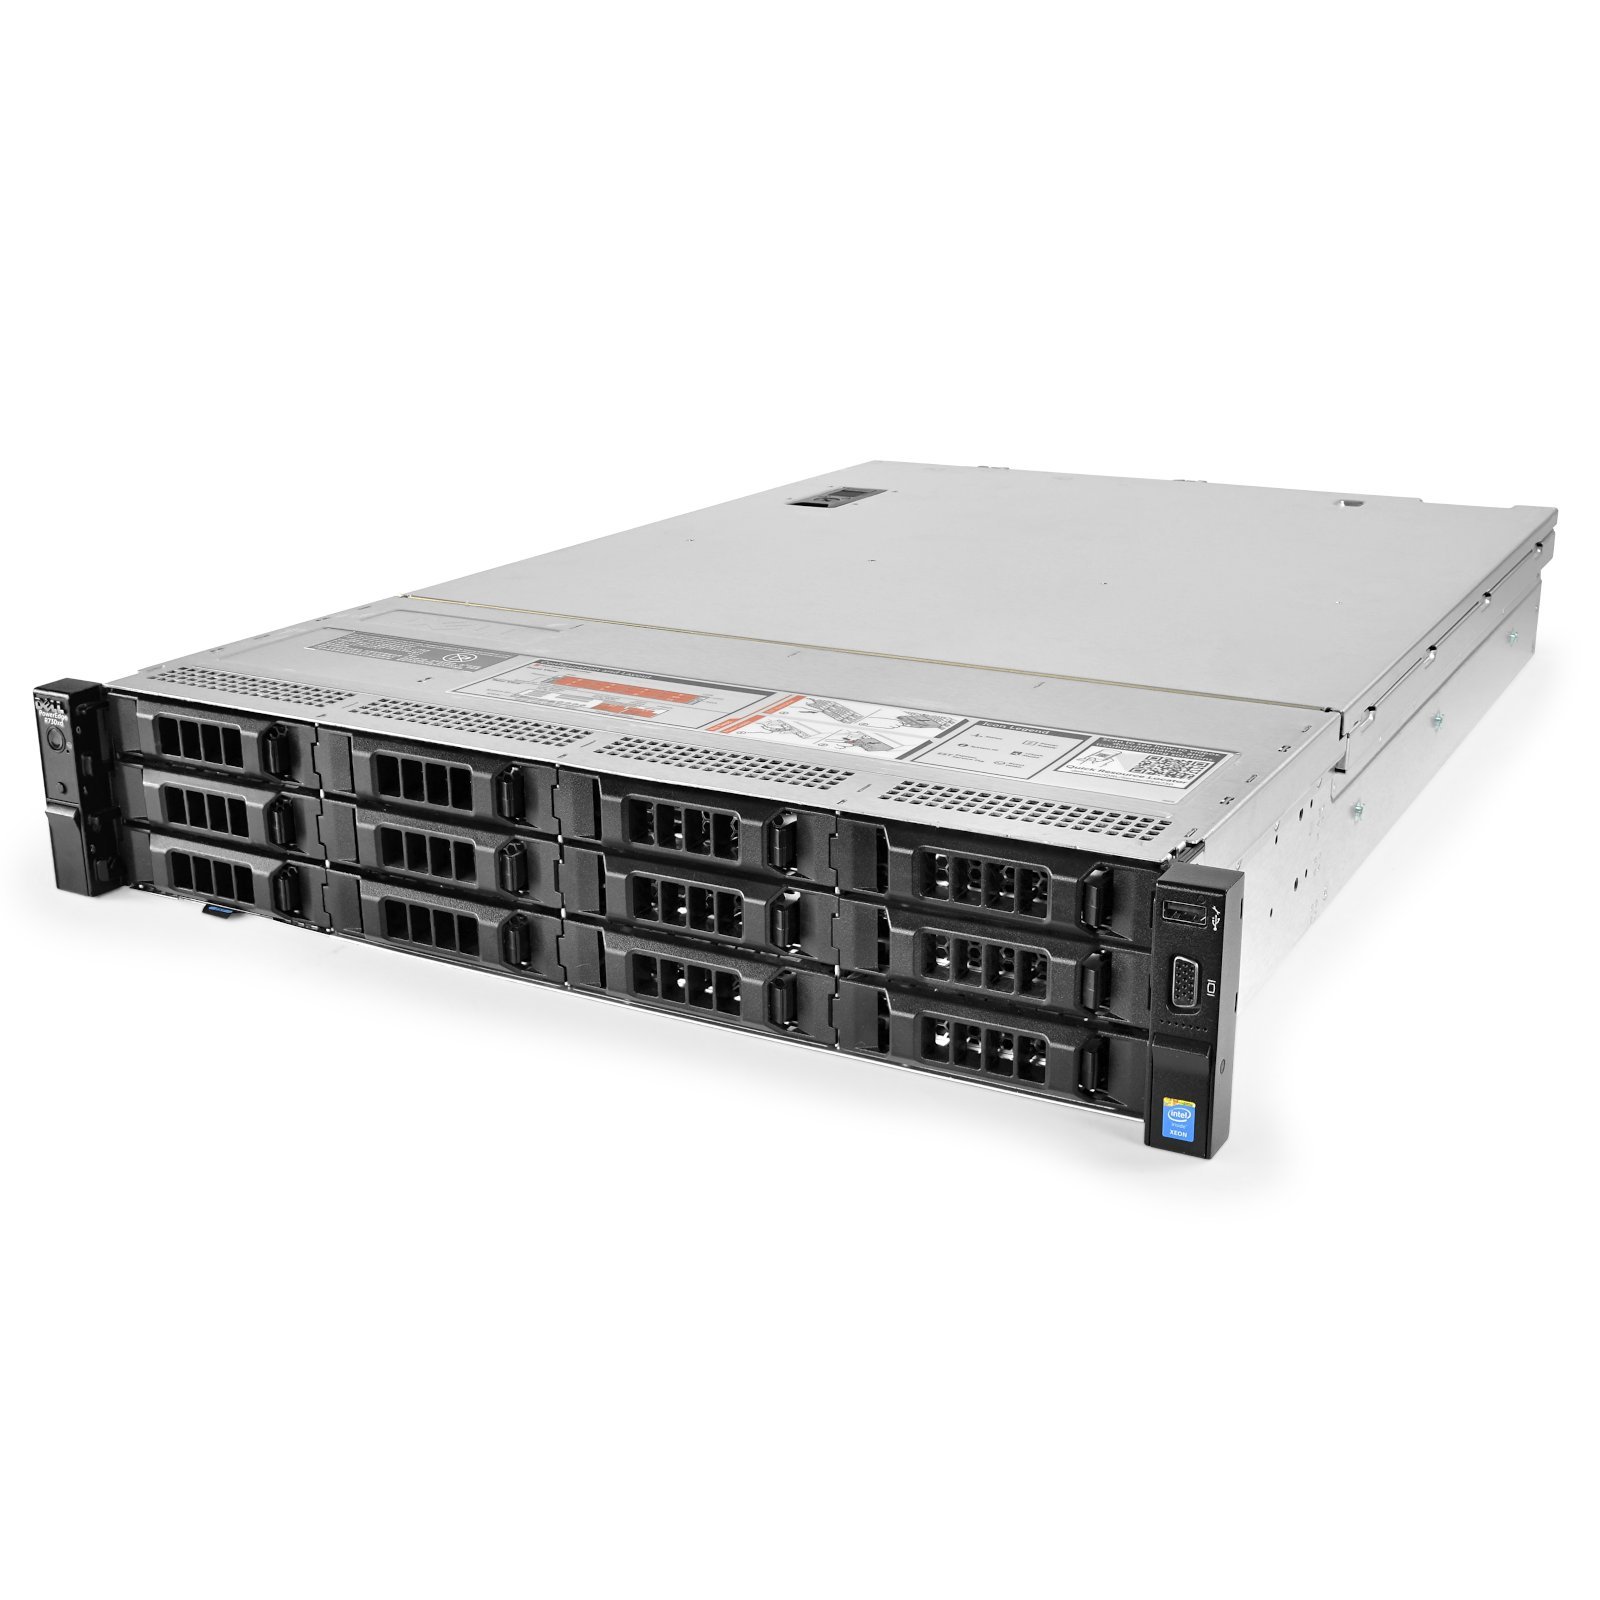 Подробное фото Сервер DELL PowerEdge R730XD 2*Xeon E5-2667v3 128Gb 2133P DDR4 12x noHDD 3.5" SAS RAID Perc H730 mini, 1024Mb, 2*PSU 750W